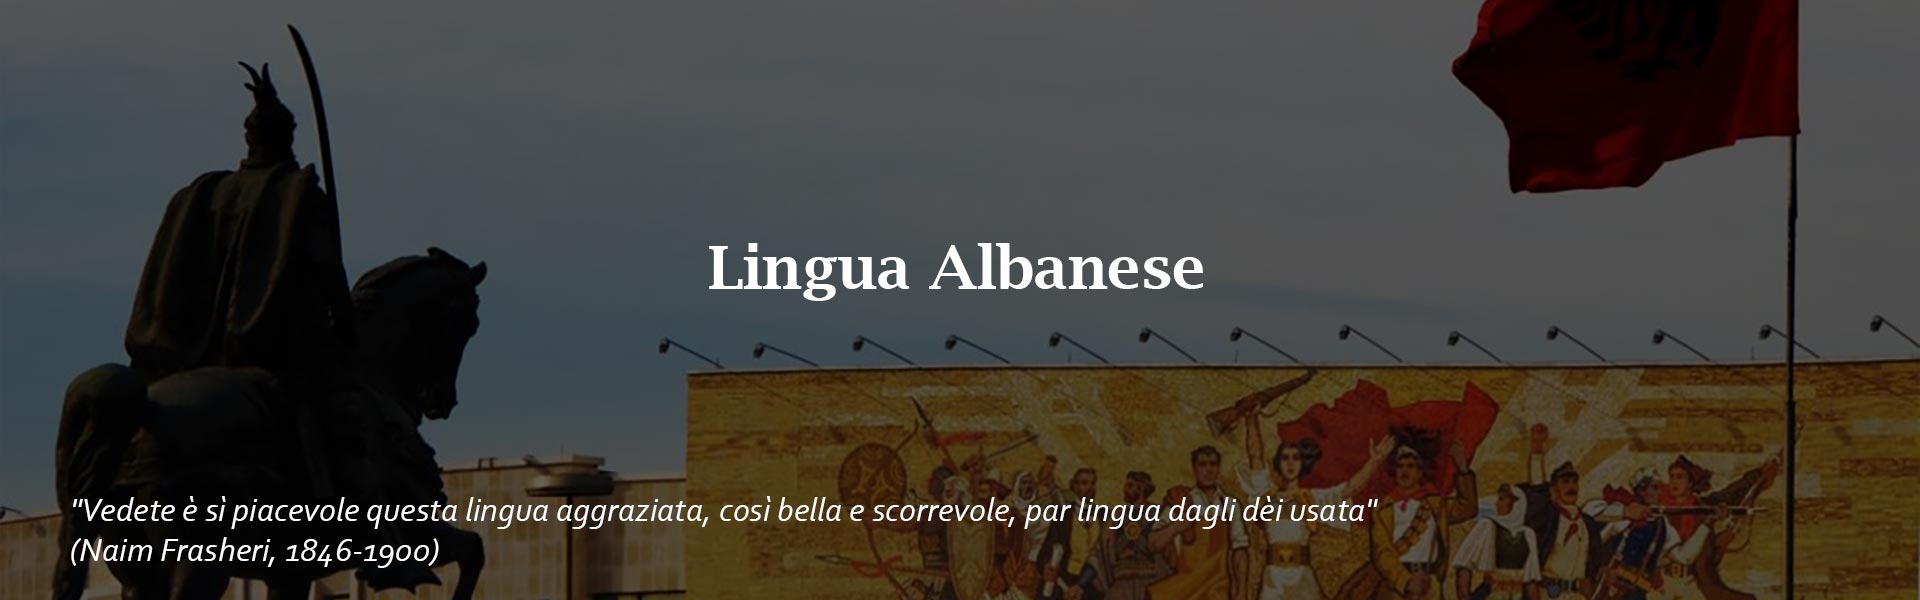 lingua-albanese-Alif pisa